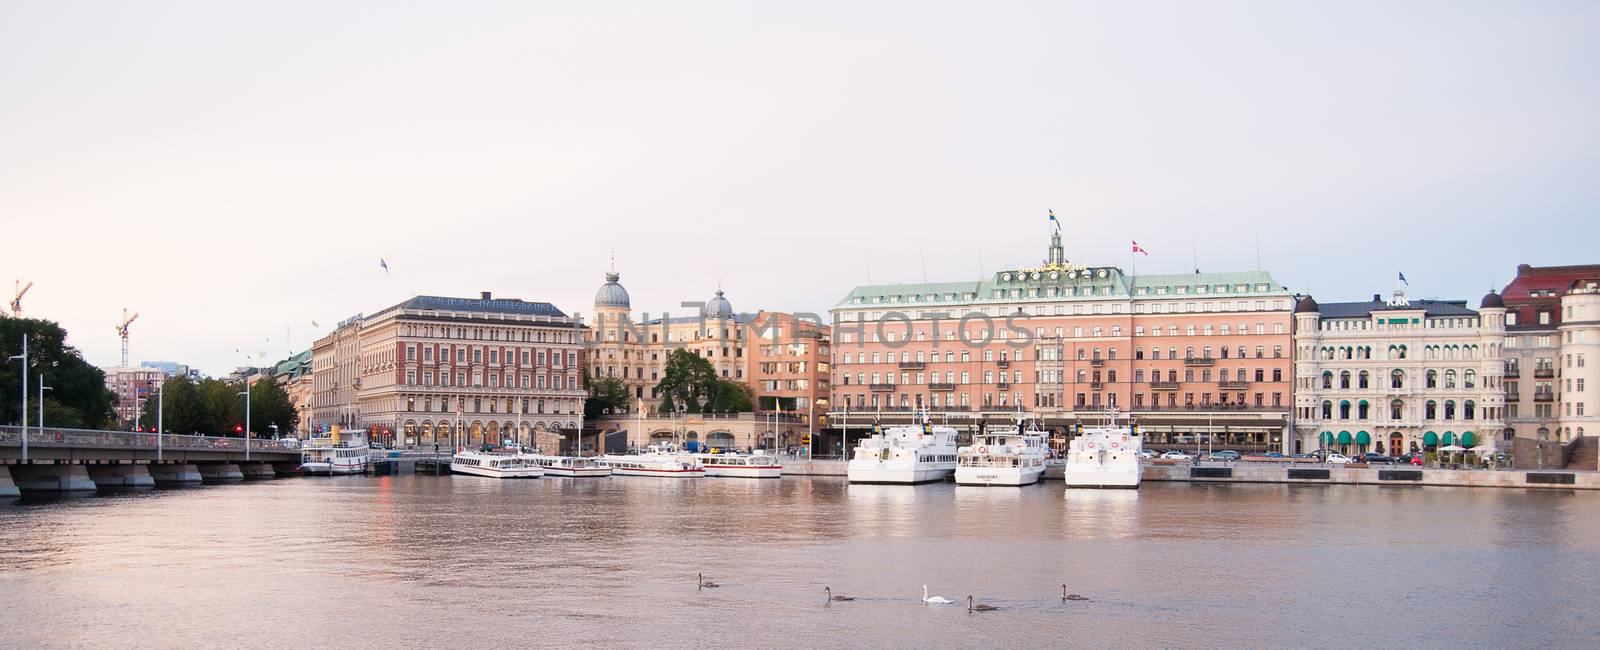 Stockholm summer vacation in Sweden for tourist